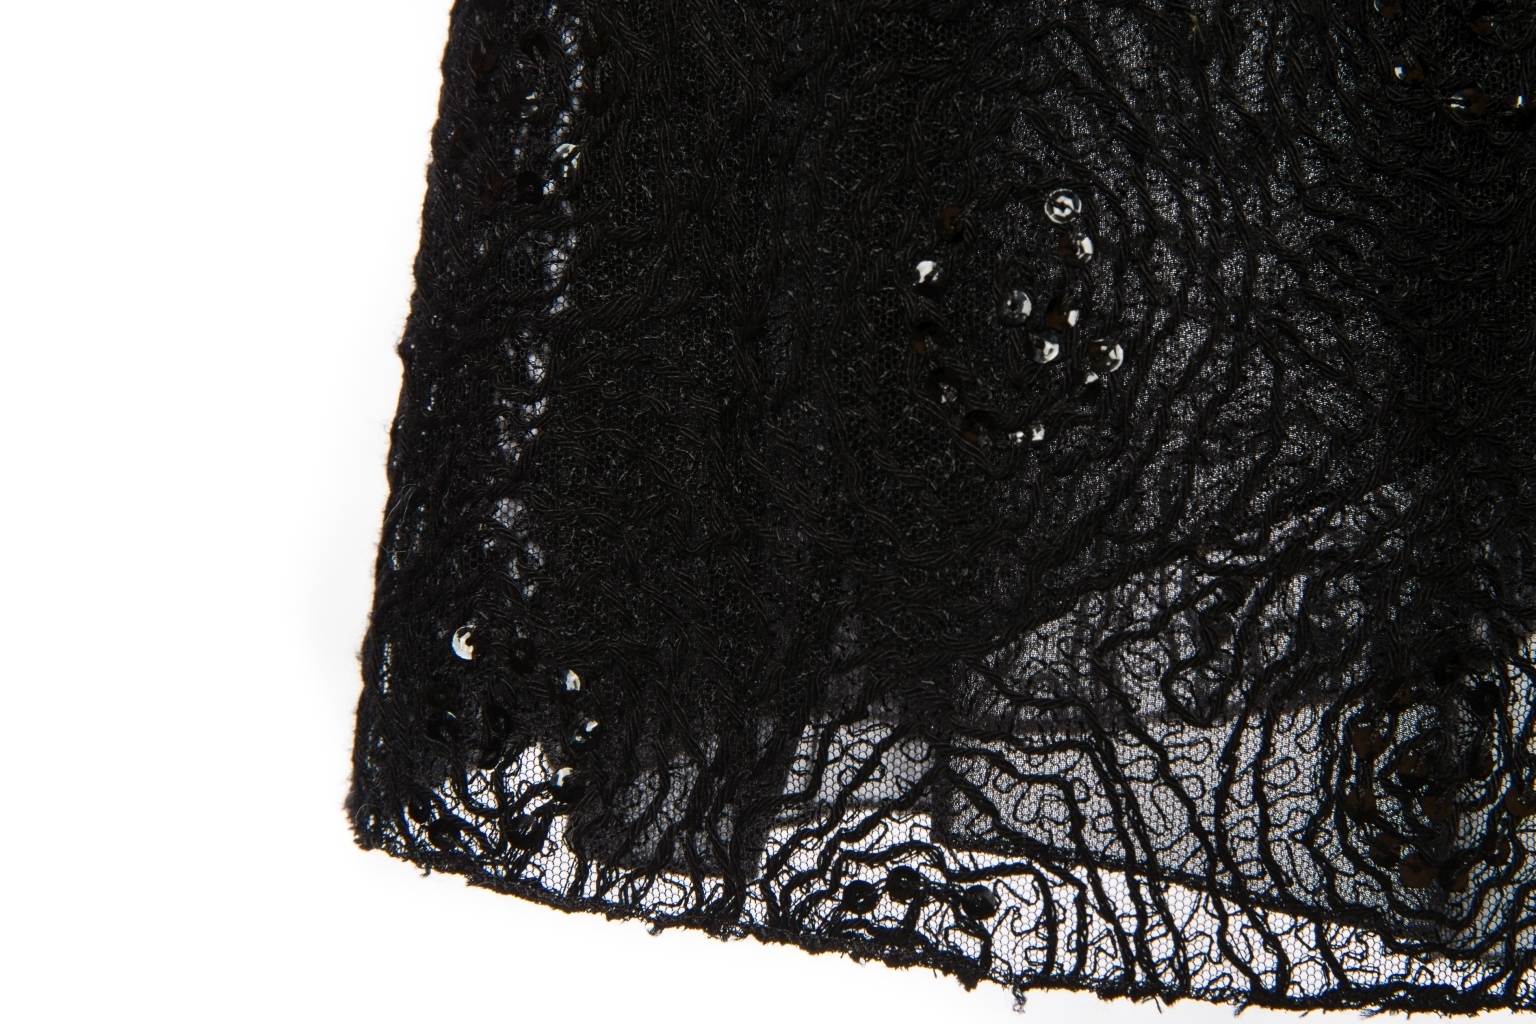 Вечерняя черная кружевная юбка, расшитая пайетками, Chanel, 38 размер.